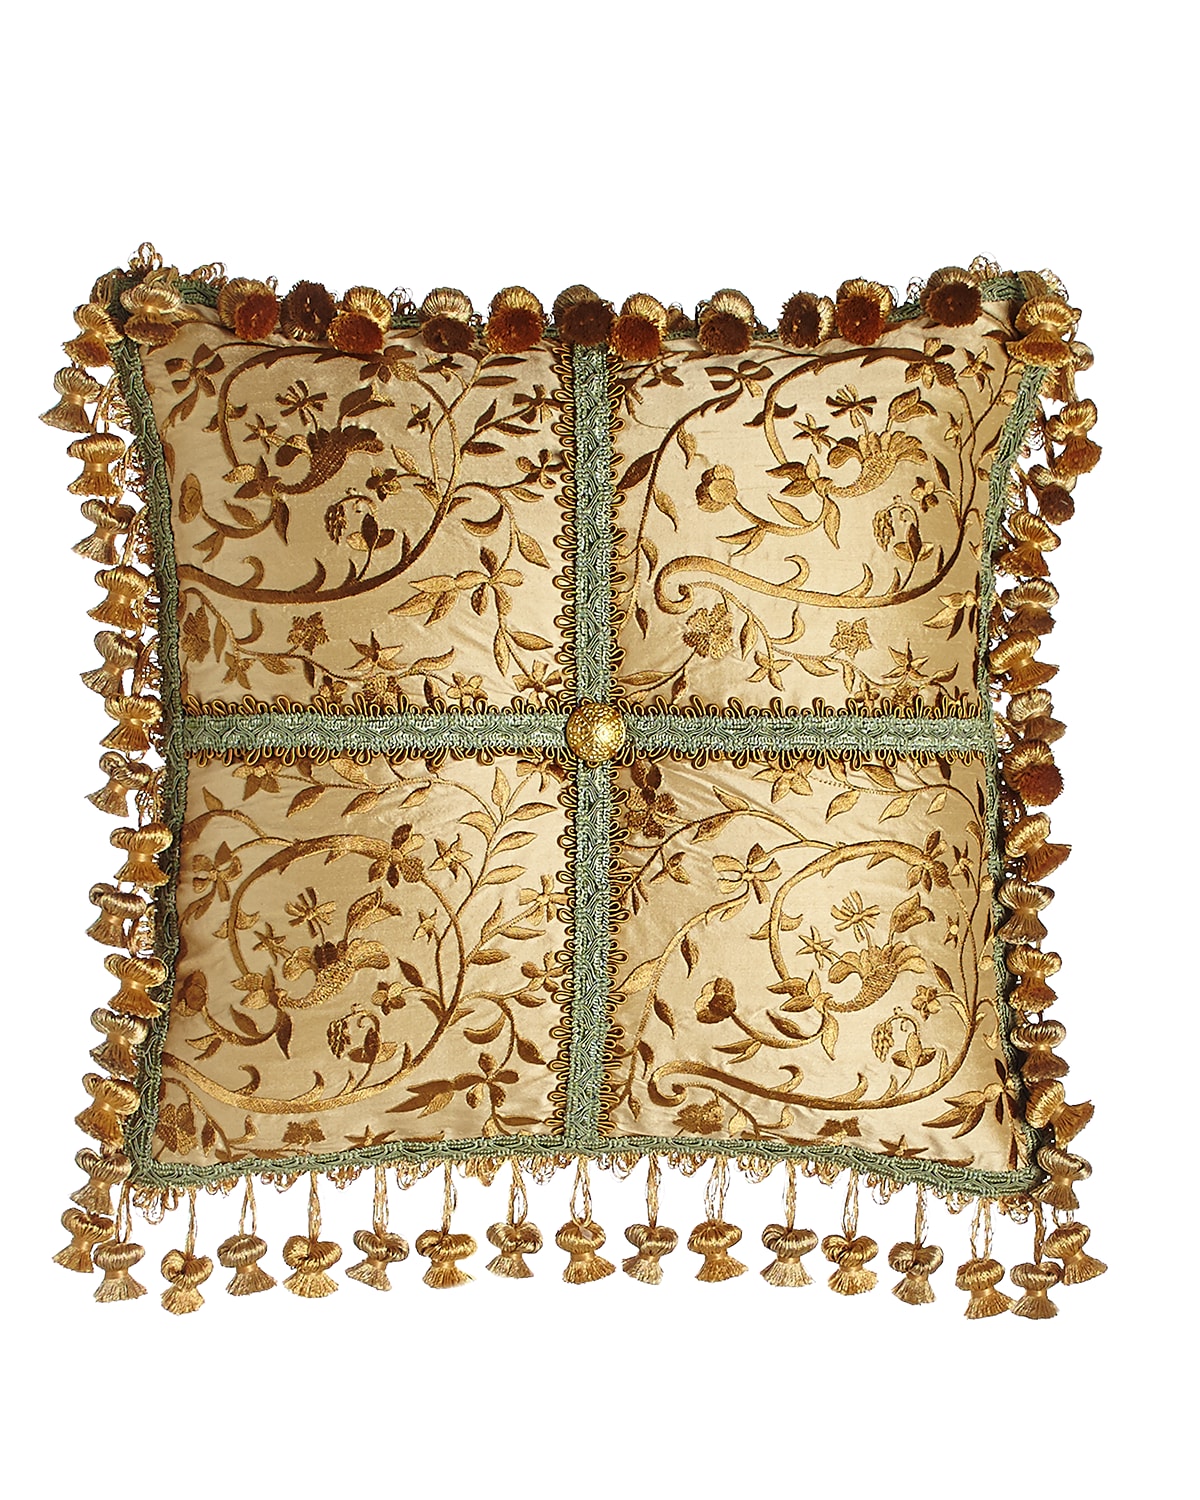 Image Sweet Dreams Palazzo Como Embroidered Silk Pillow, 14"Sq.